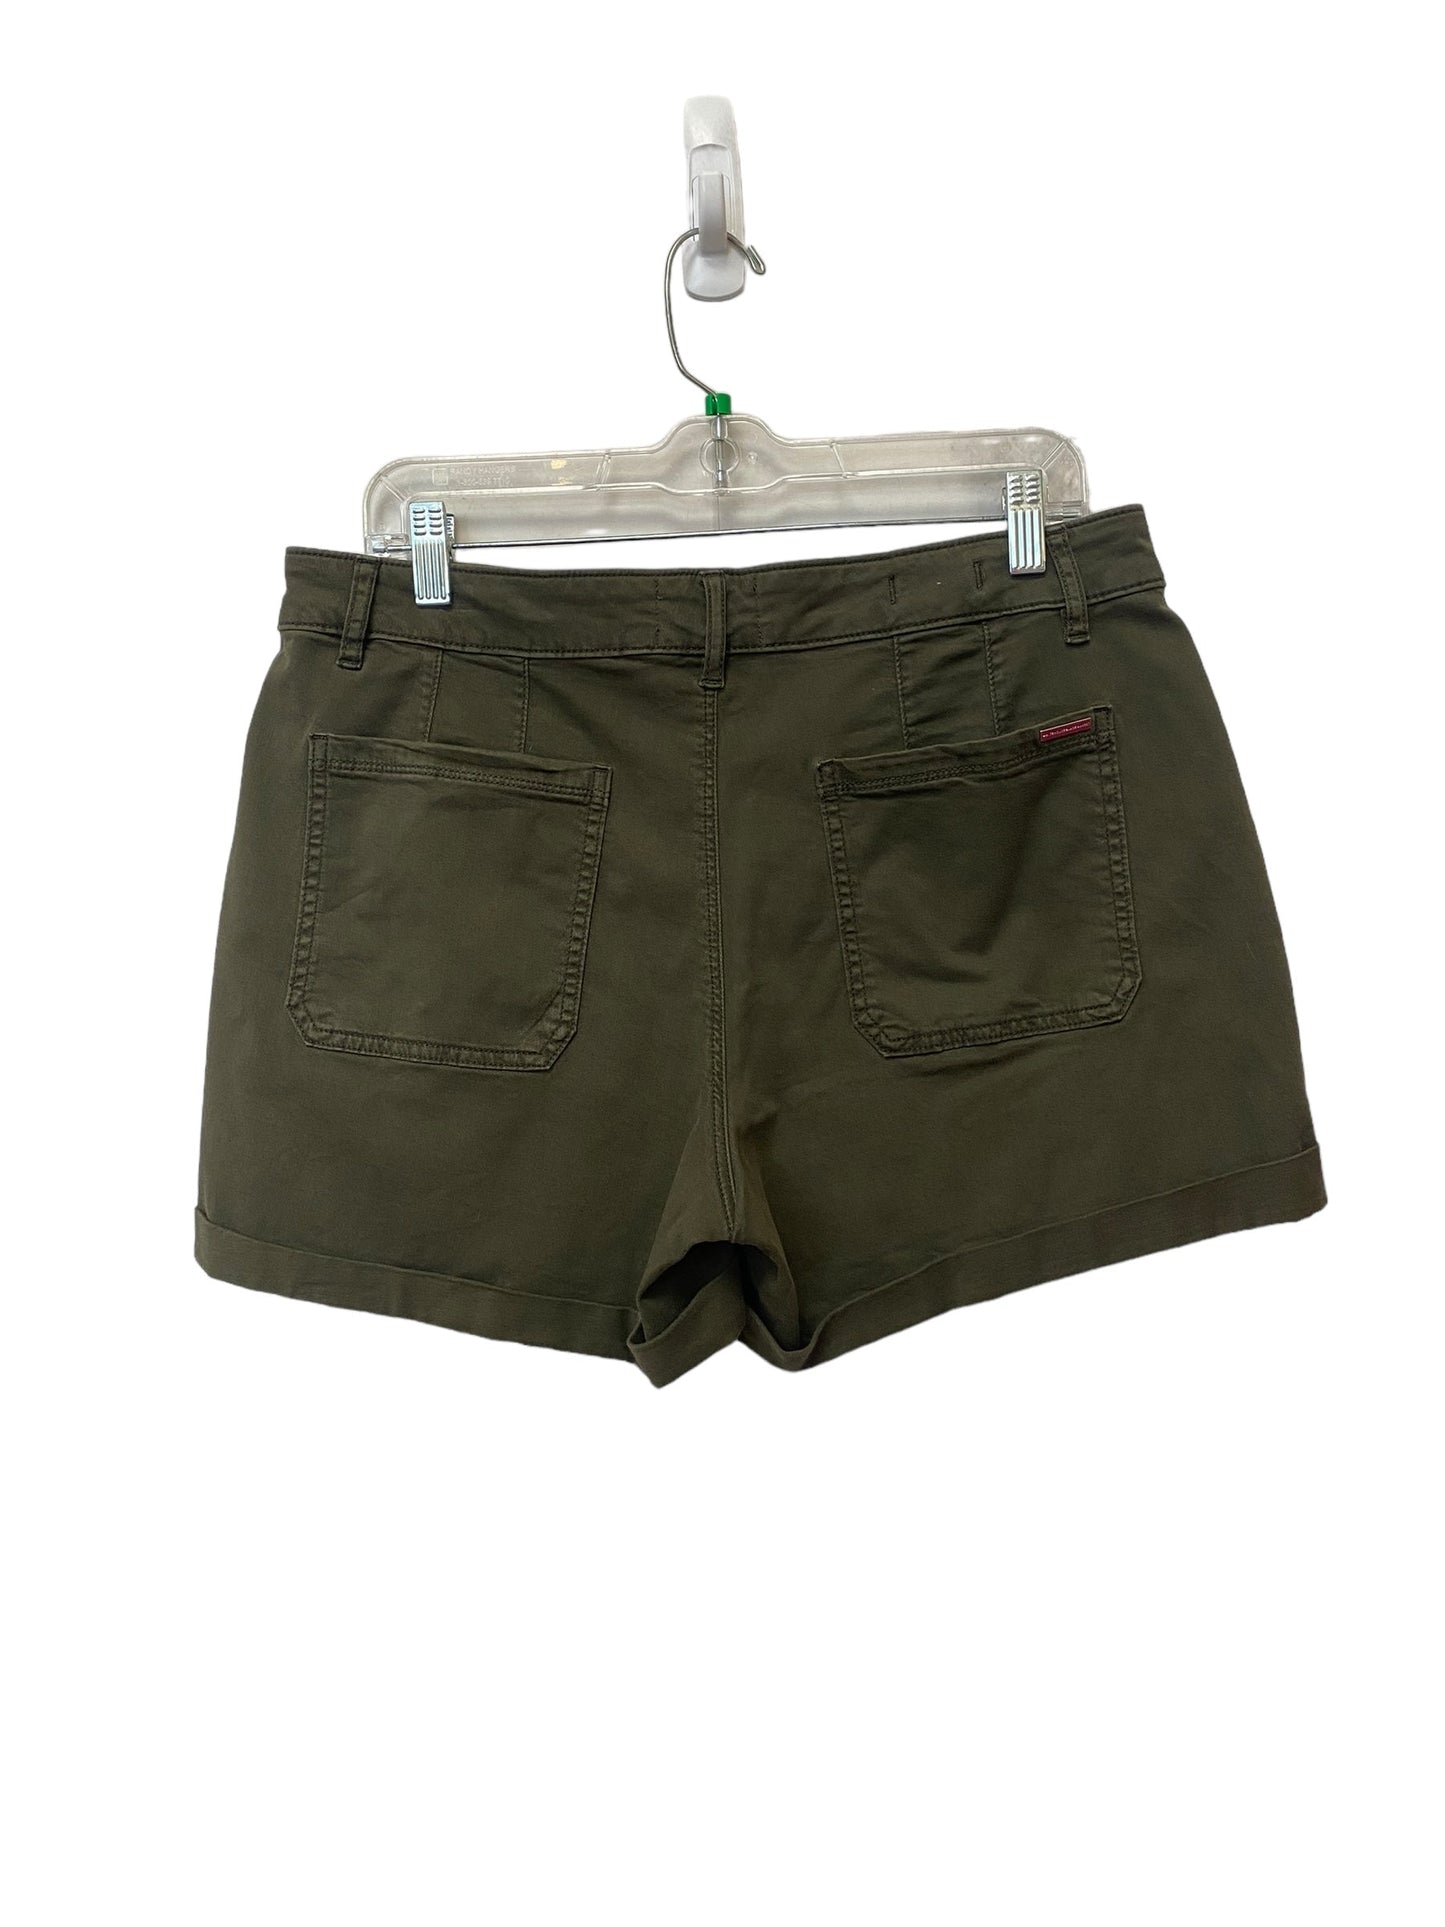 Green Shorts White House Black Market, Size 12